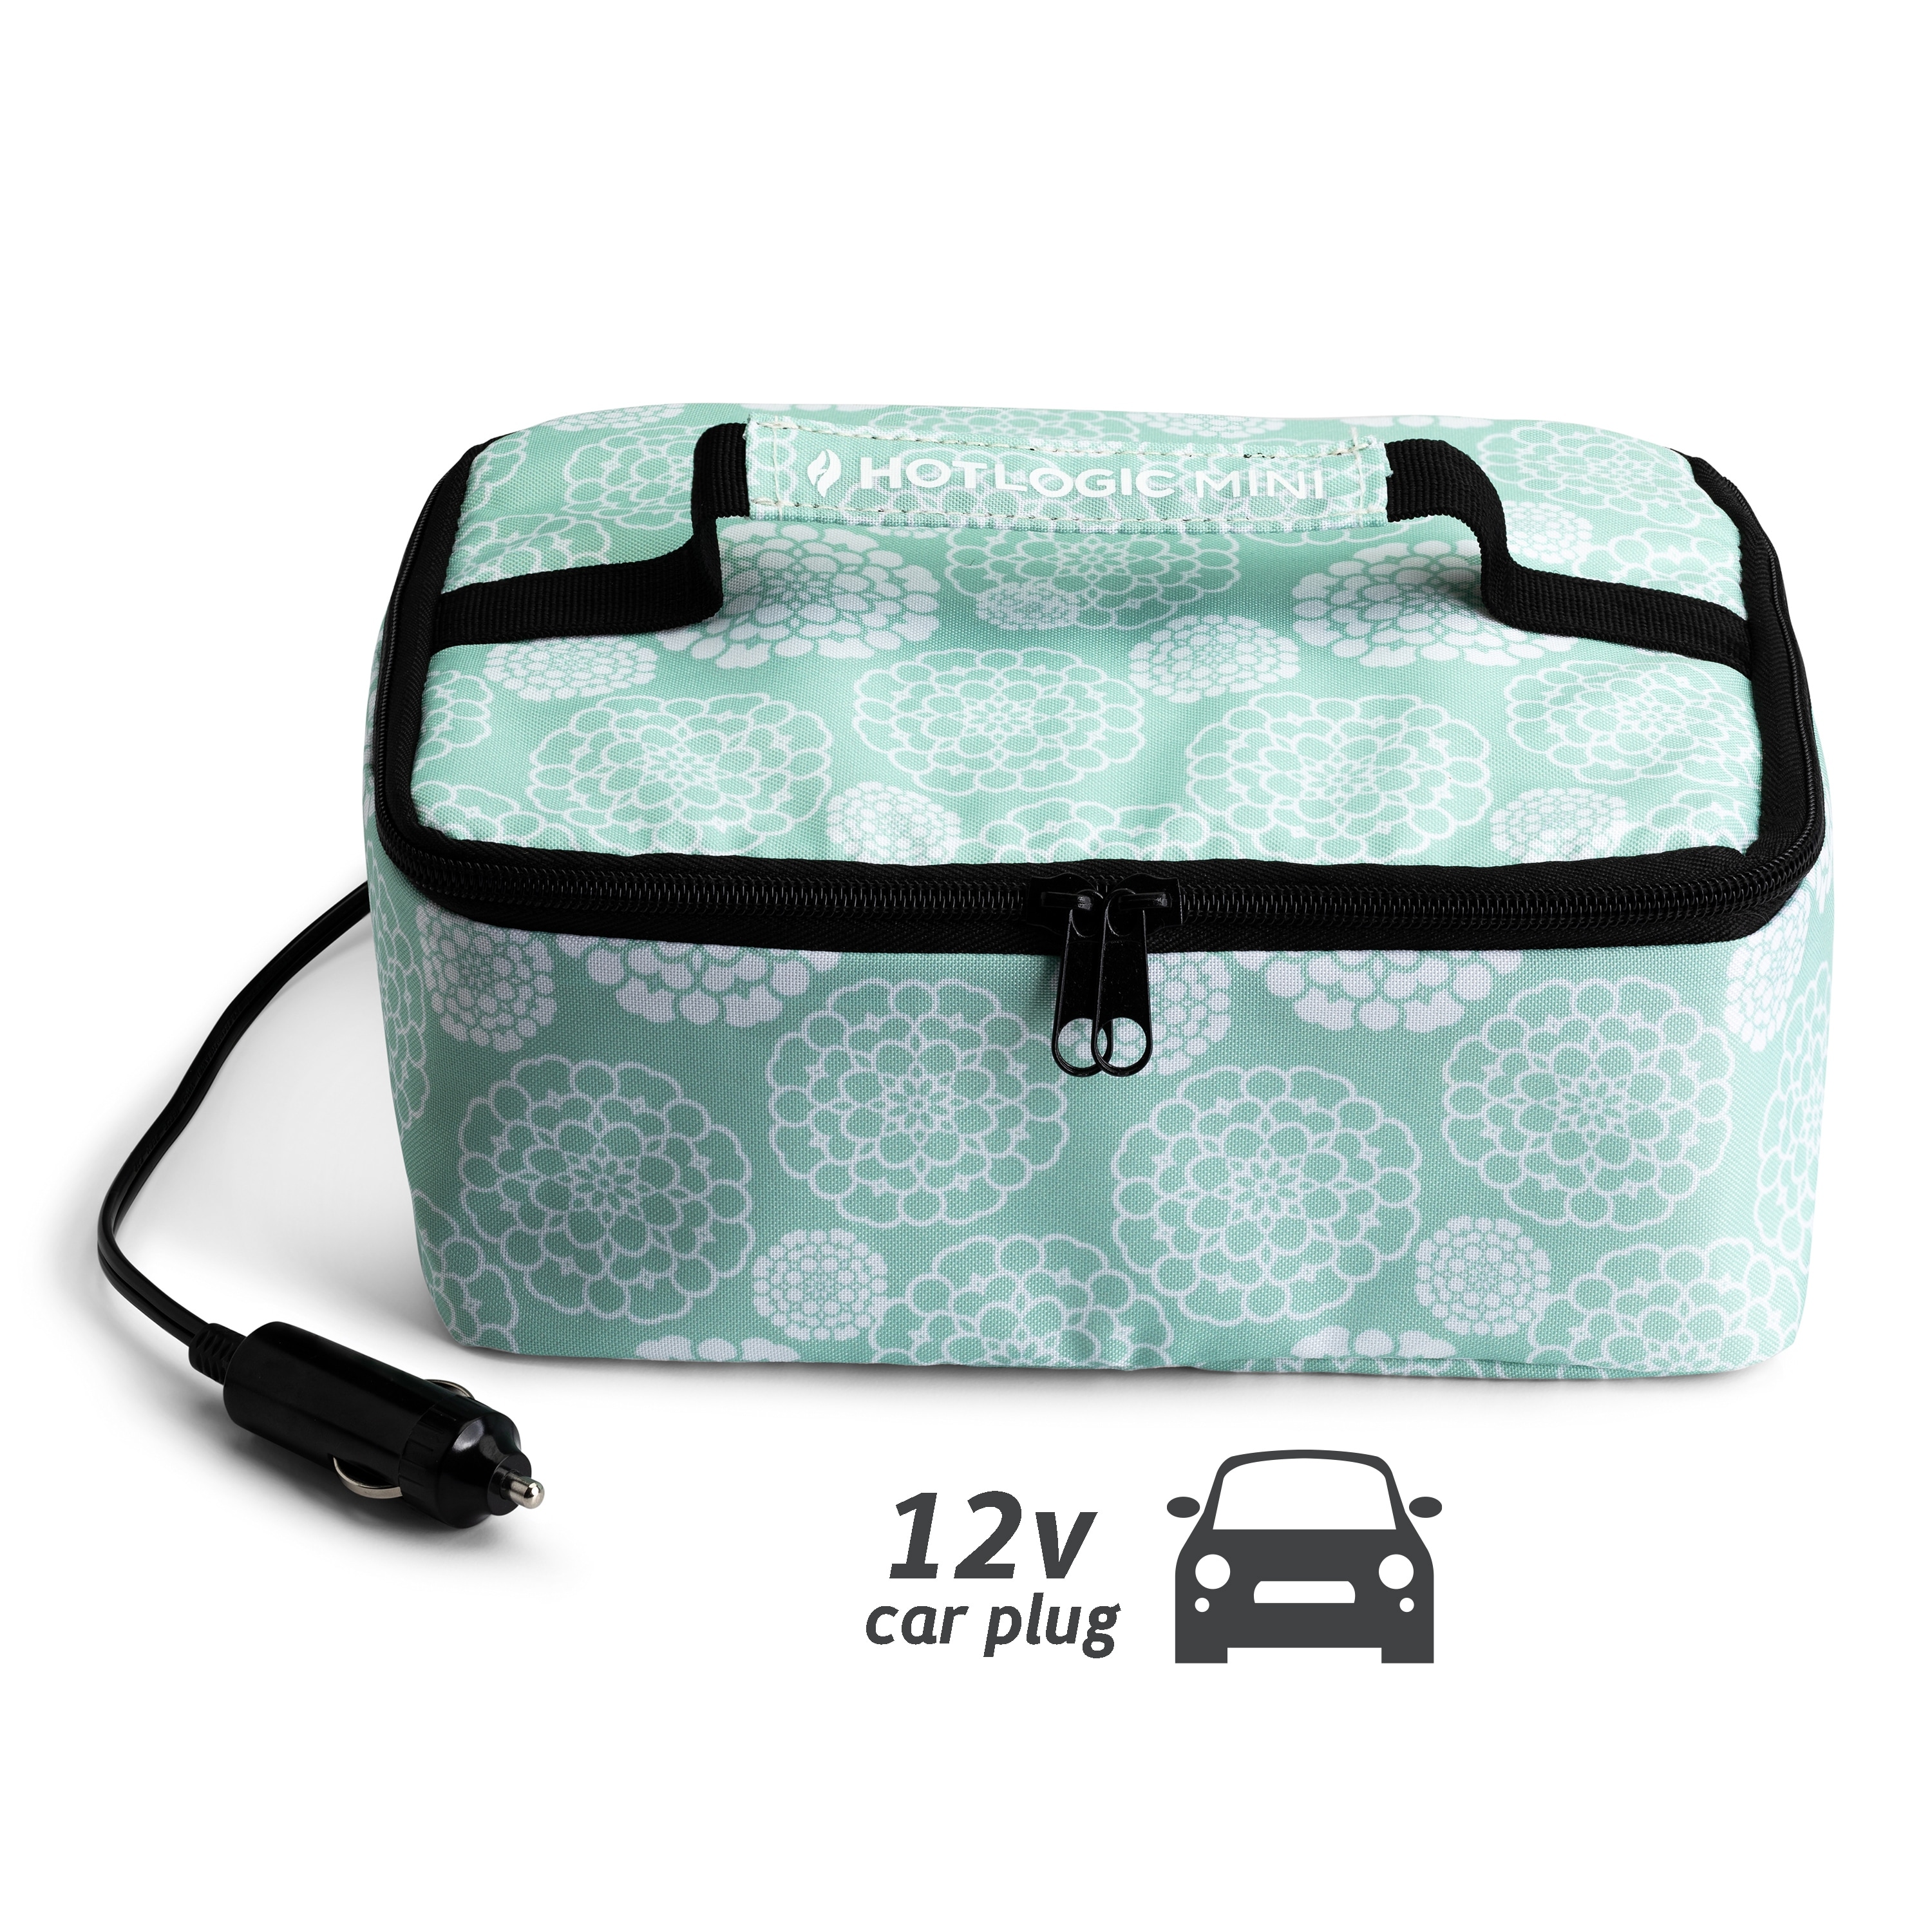 HOTLOGIC Portable Personal 12V Mini Oven, Aqua Floral - Bed Bath & Beyond -  33313040